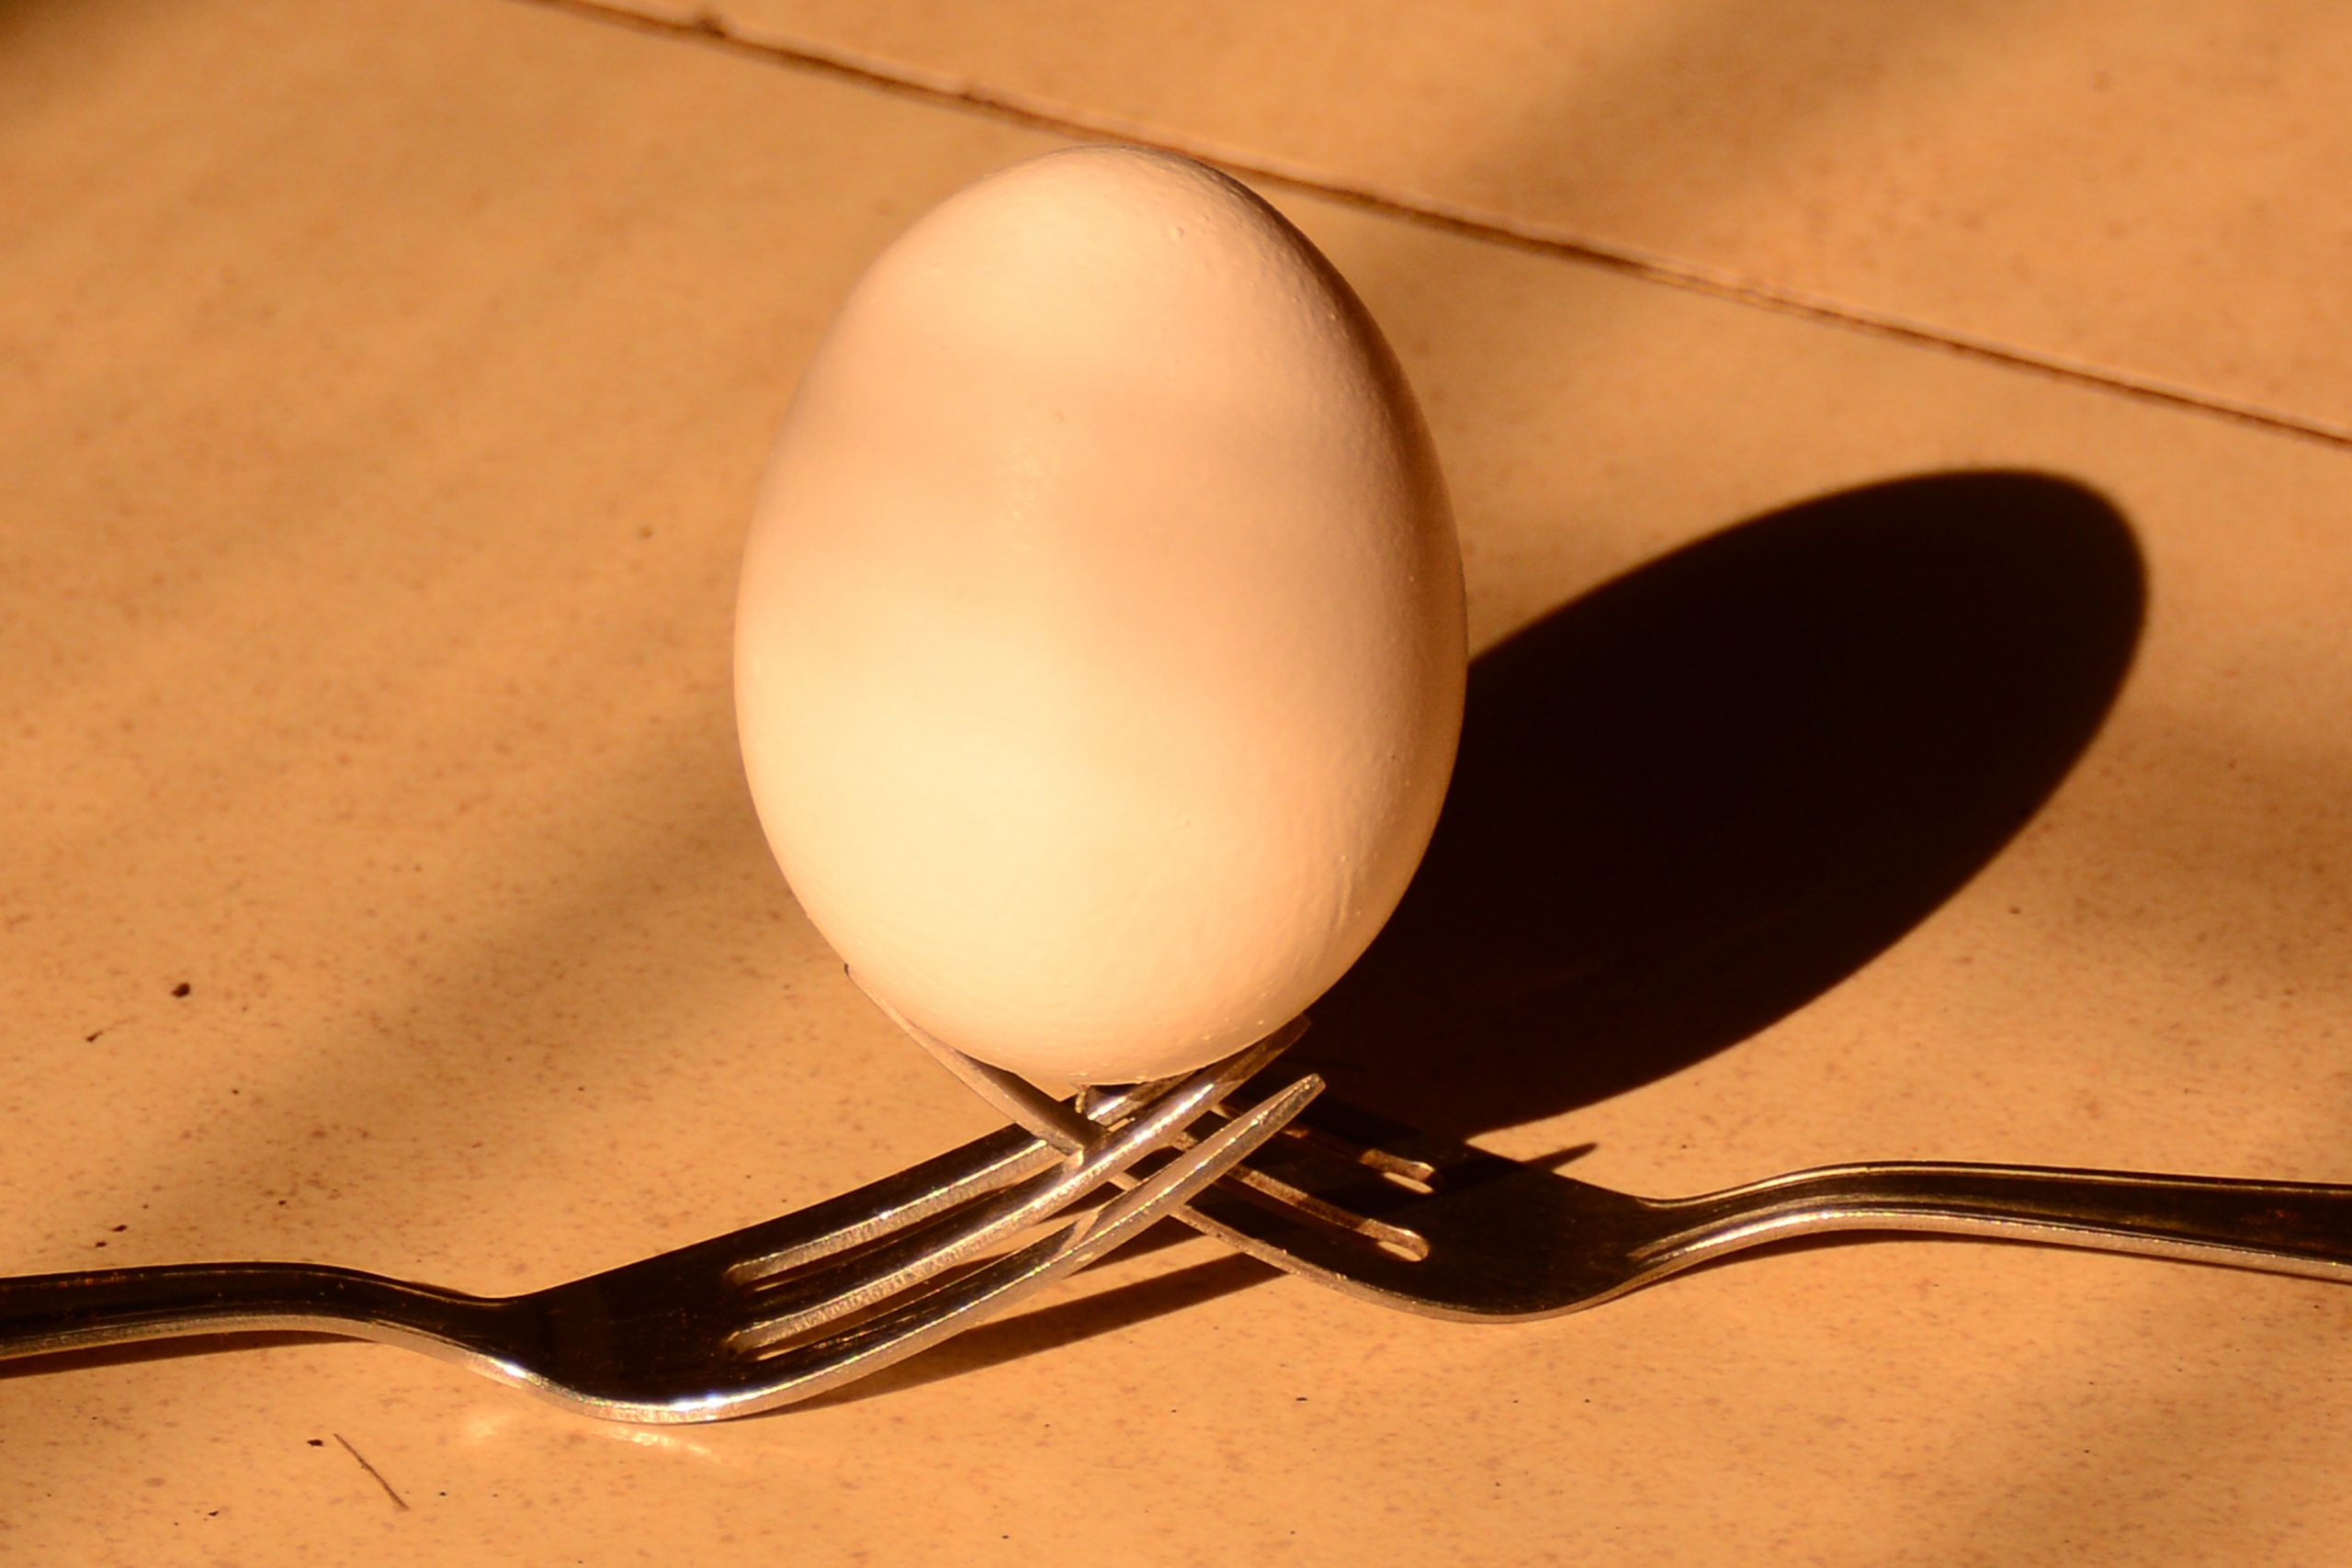 An Egg on fork spoons